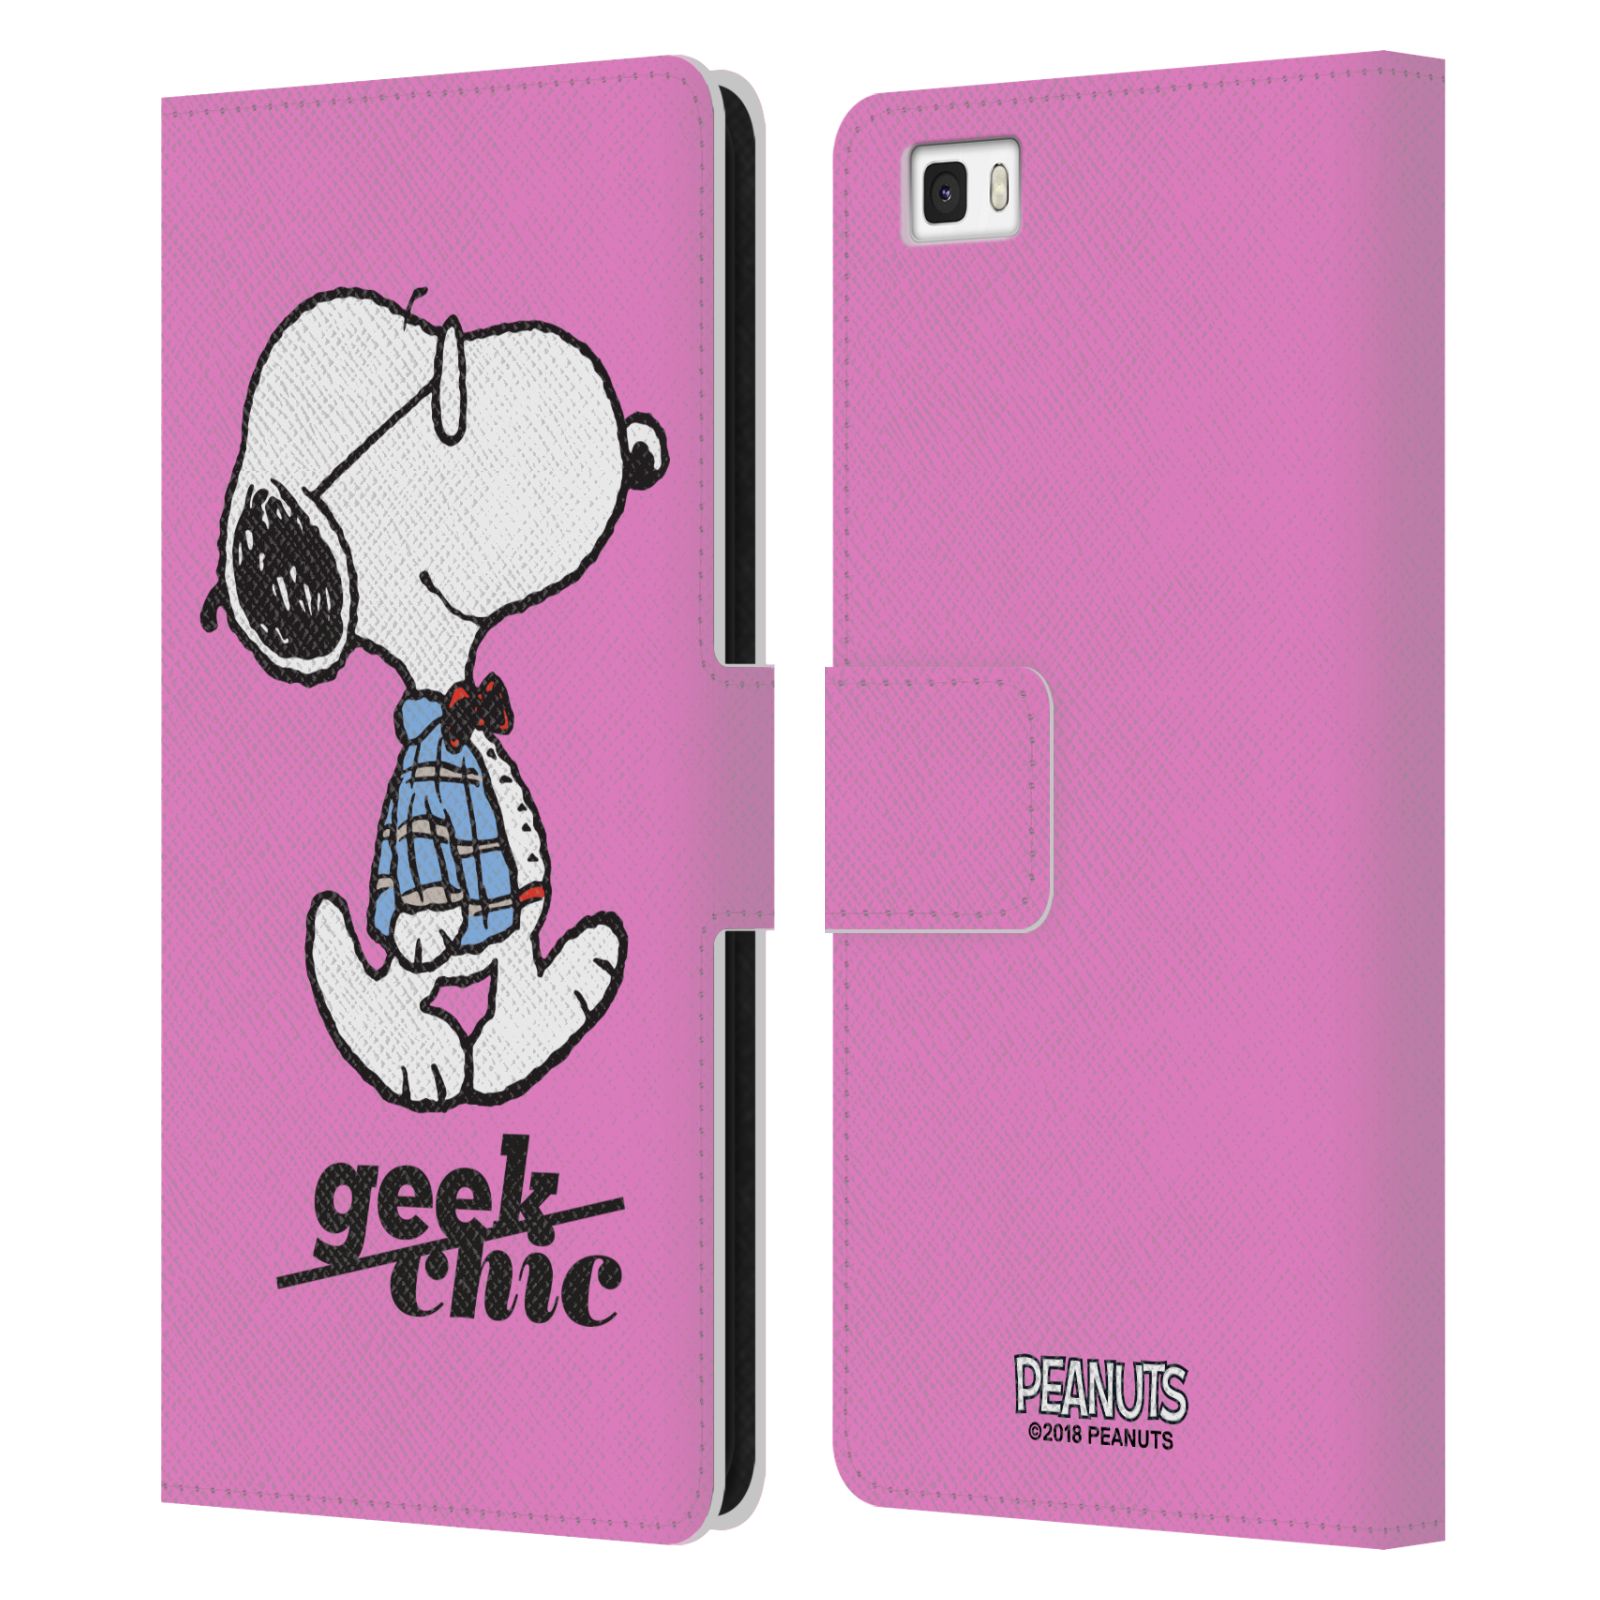 Pouzdro na mobil Huawei P8 Lite - Head Case - Peanuts - růžový pejsek snoopy nerd